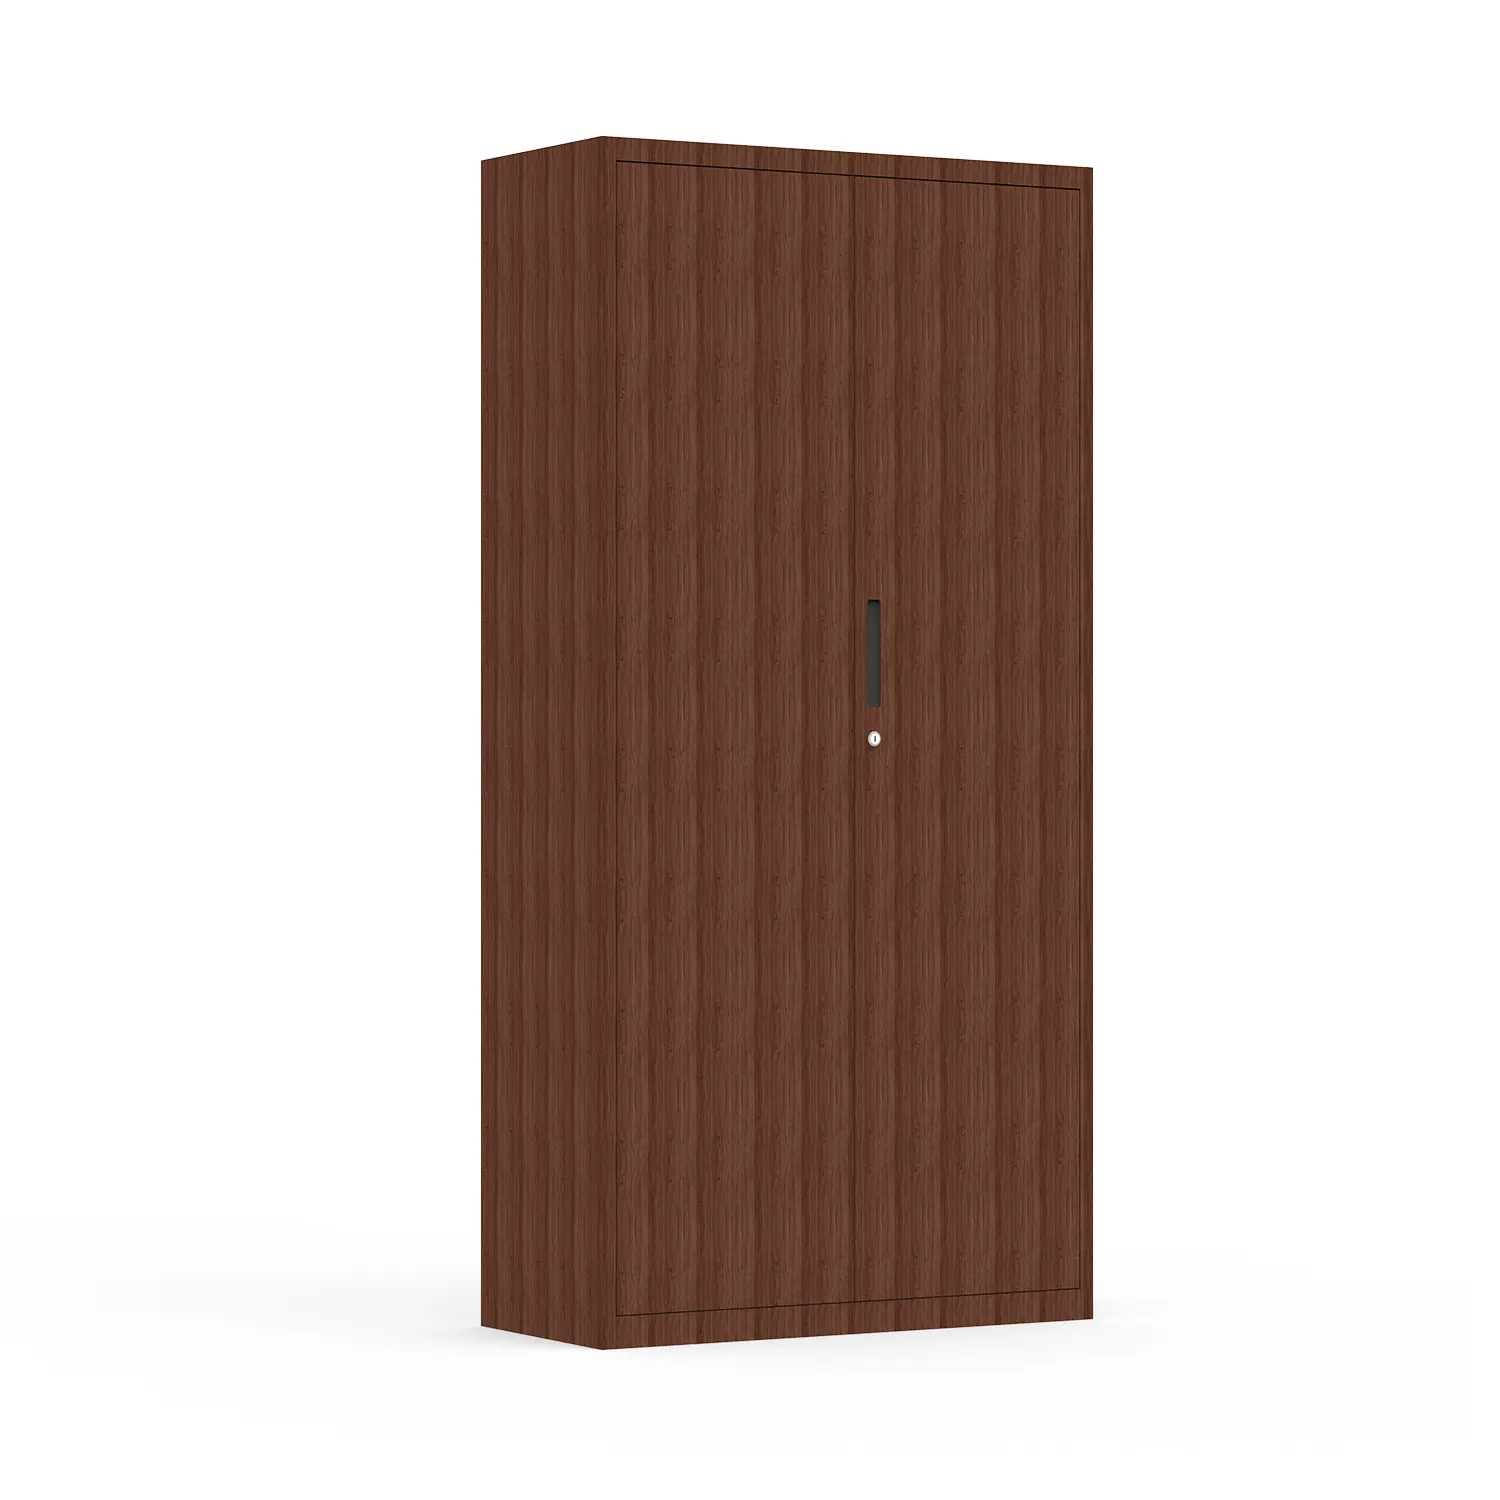 Best Seller Metal Cabinet Office Furniture Iron File Storage Cabinet Price Modern Design Double Doors Steel Filing Cabinet